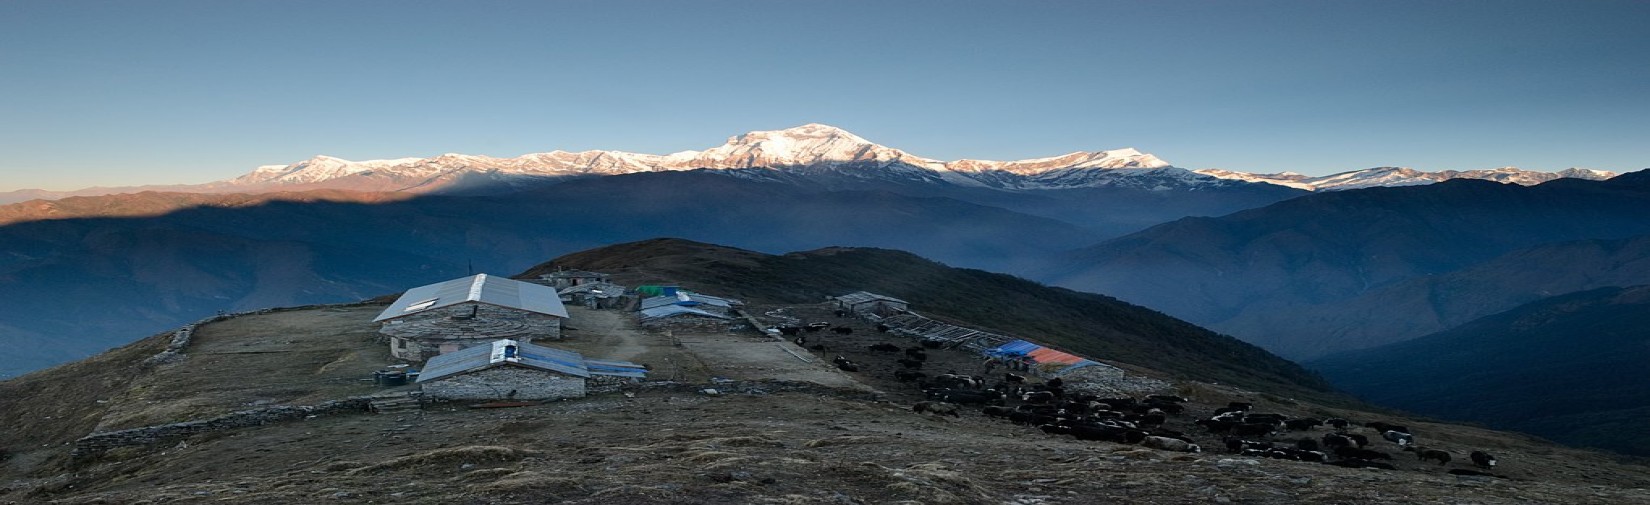 The view of Dhaulagiri from Khopra Danda/Ridge Trek 10 Days - Nepal Trail Finder